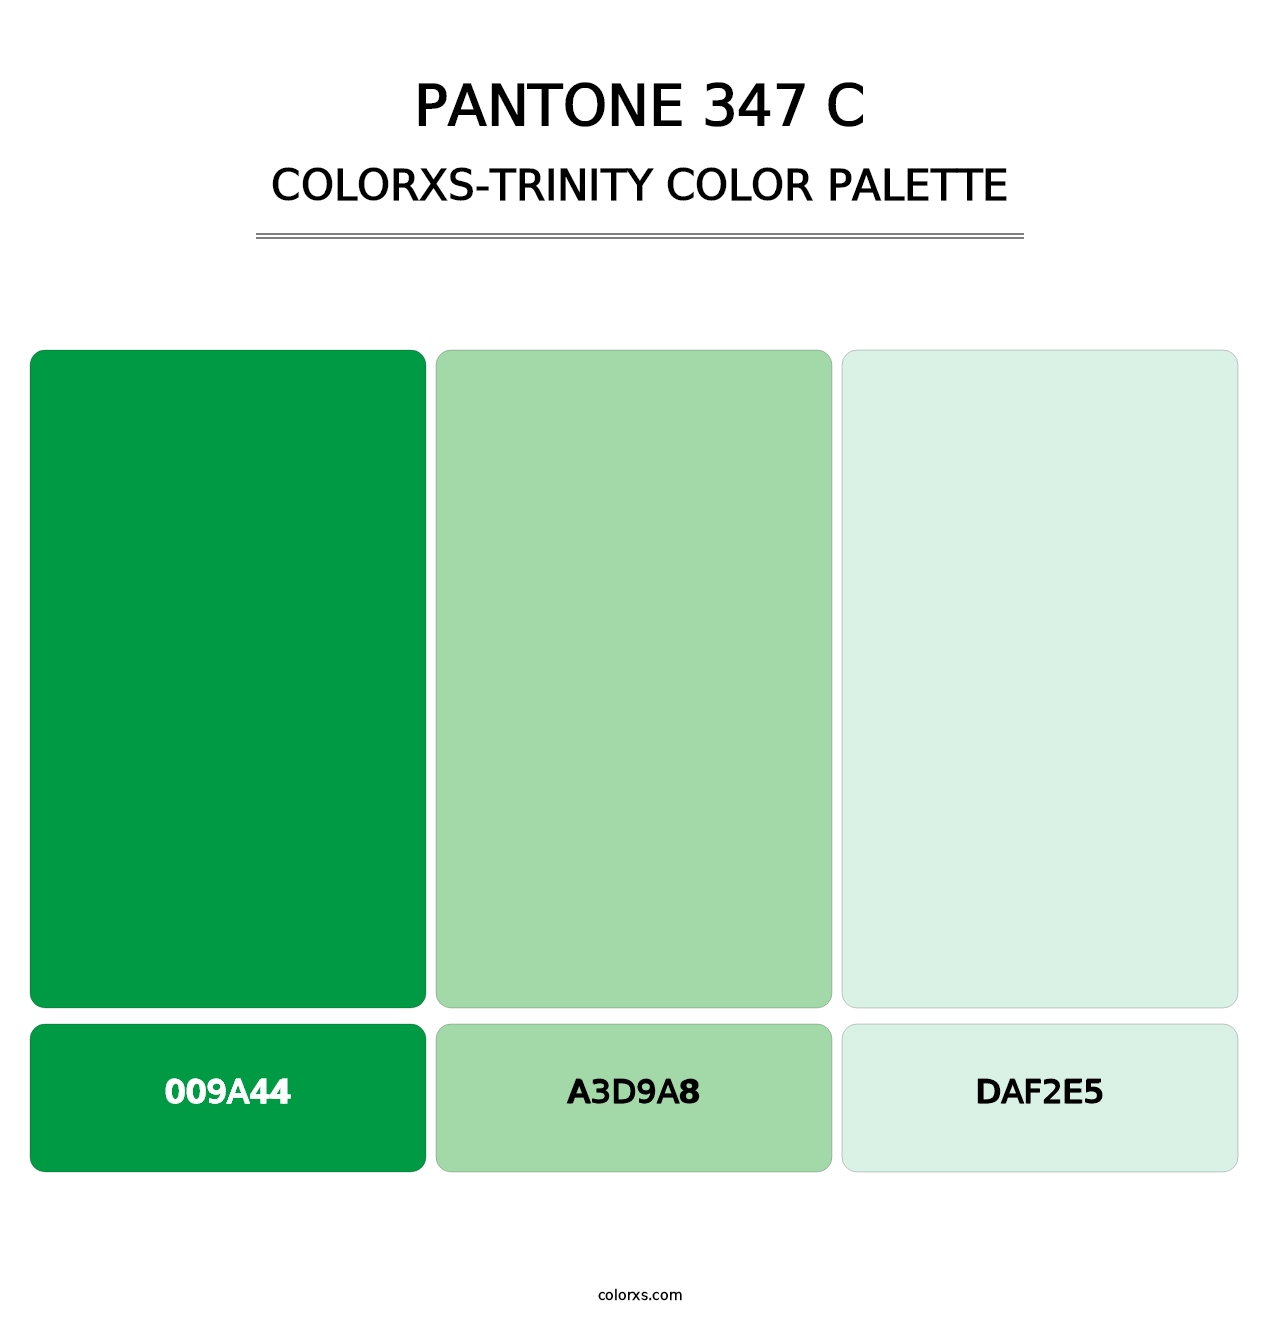 PANTONE 347 C - Colorxs Trinity Palette